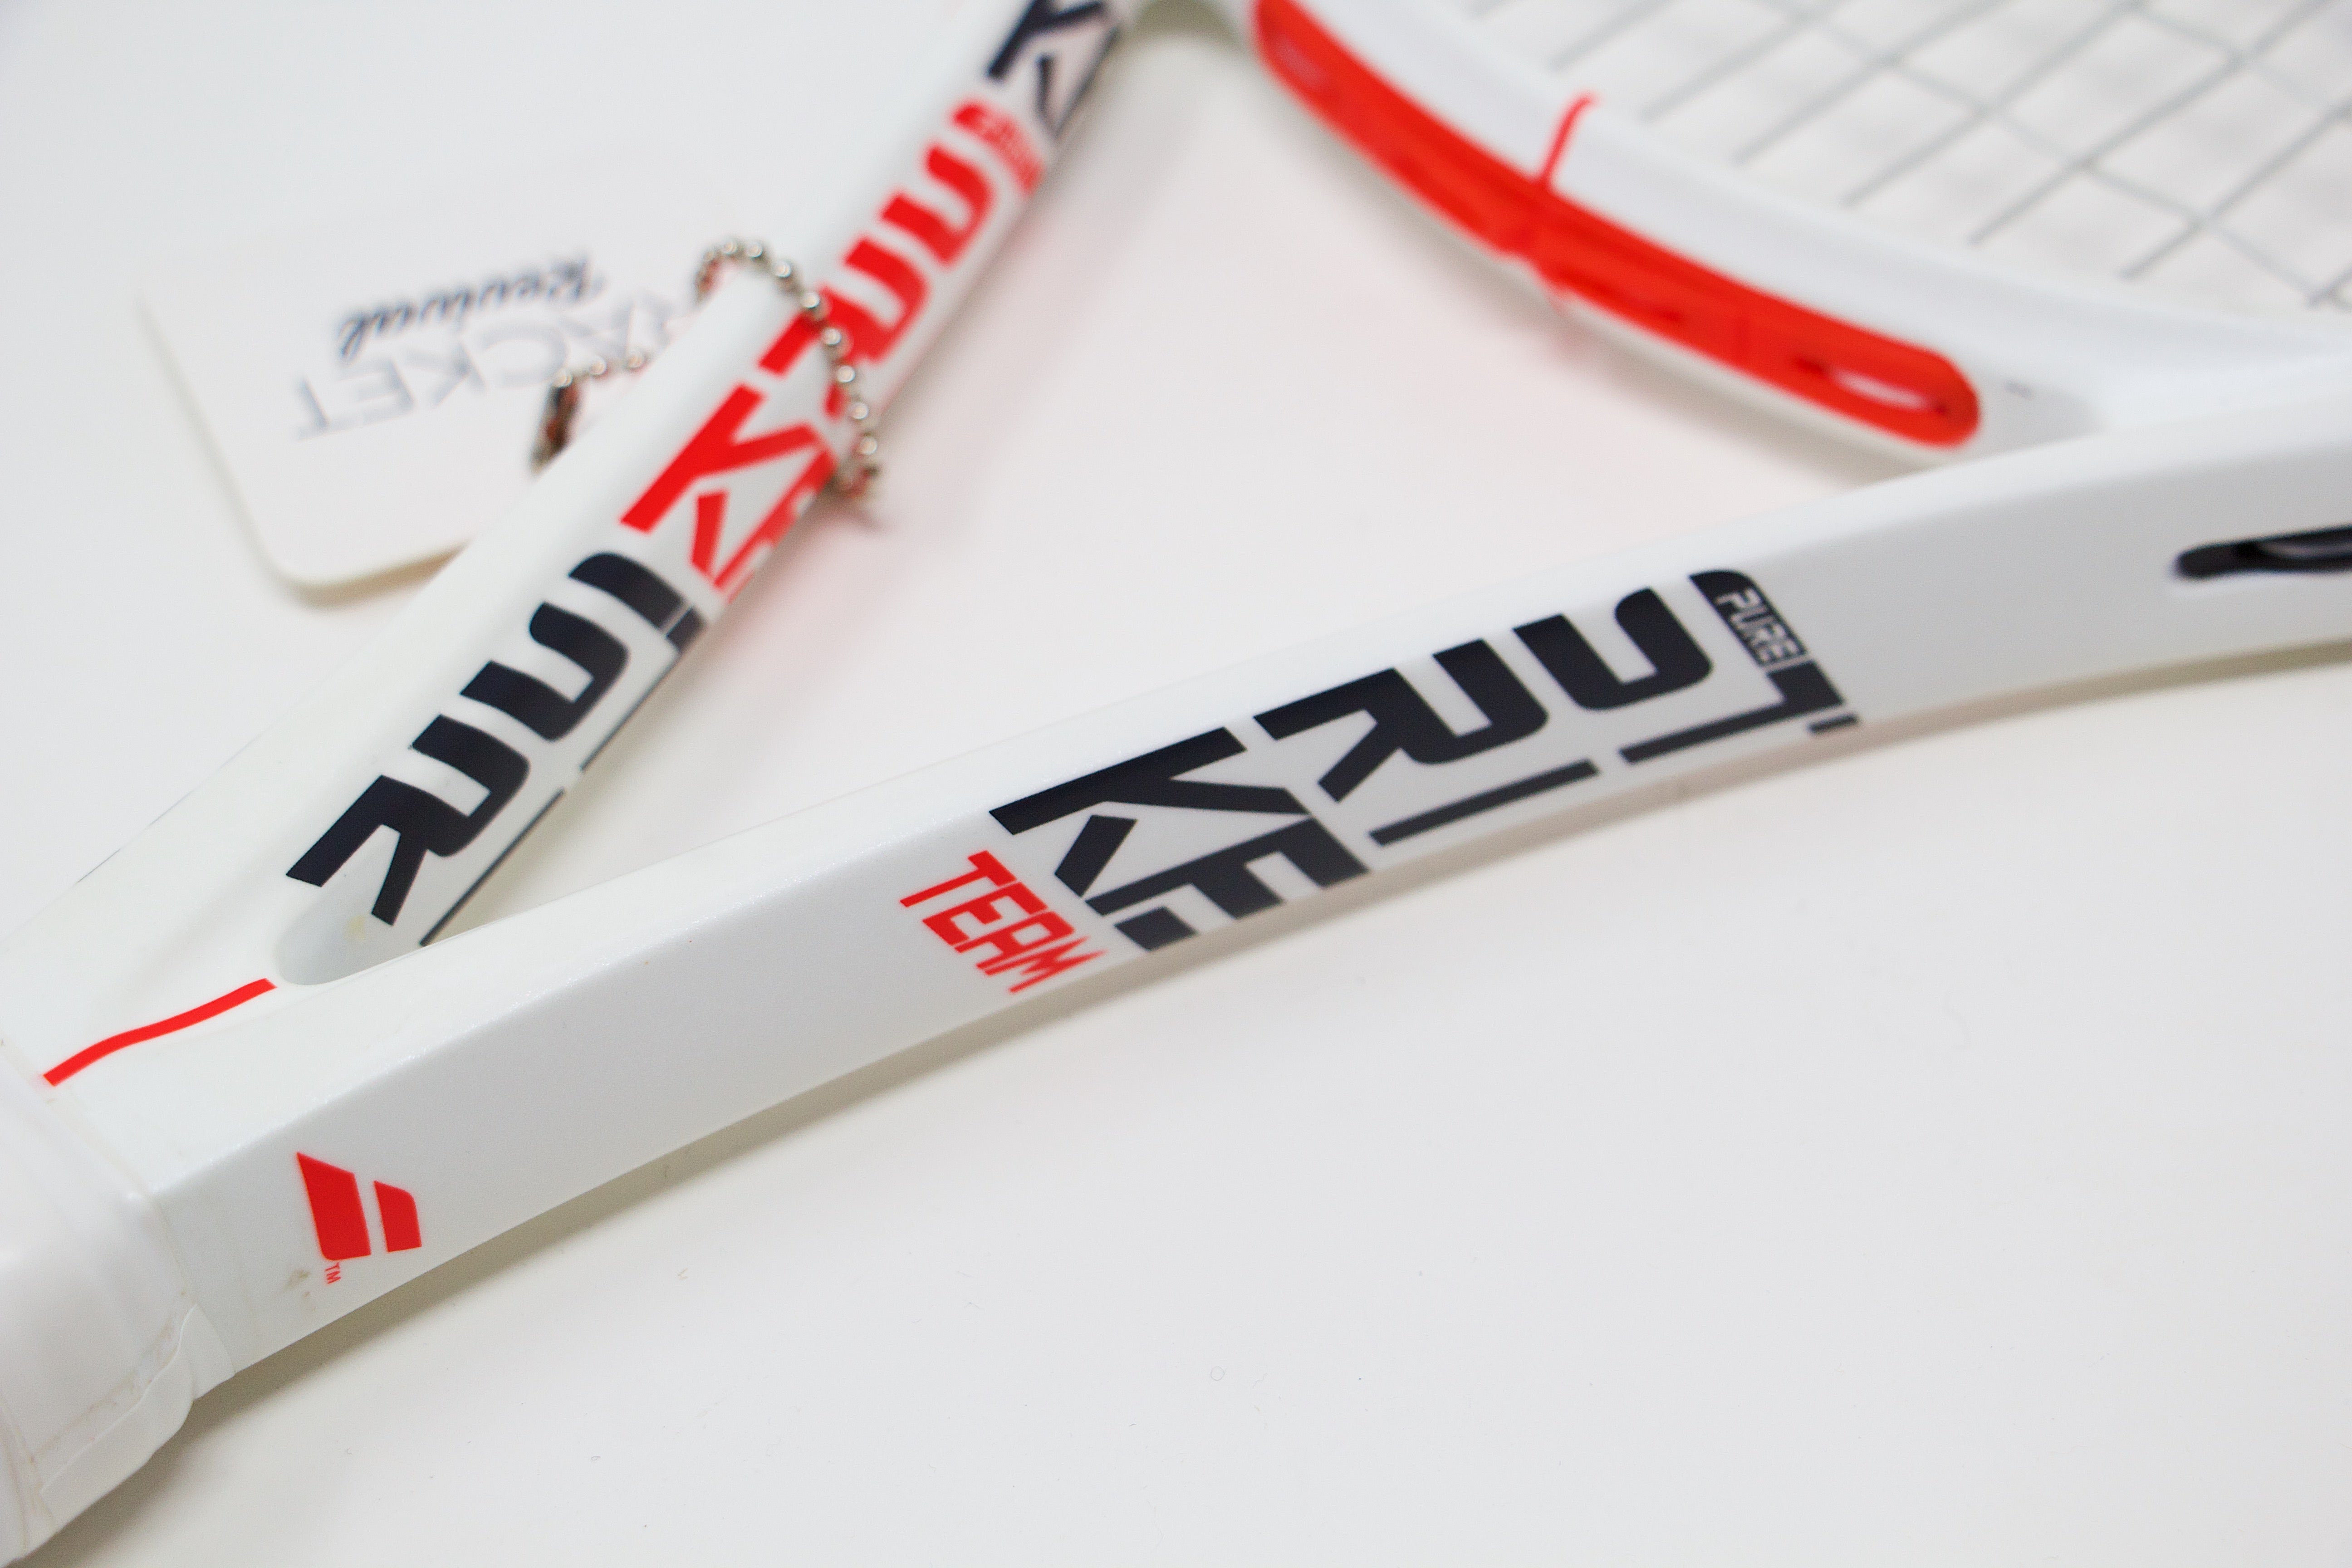 Babolat Pure Strike Team 2019 Refurbished Tennis Racket